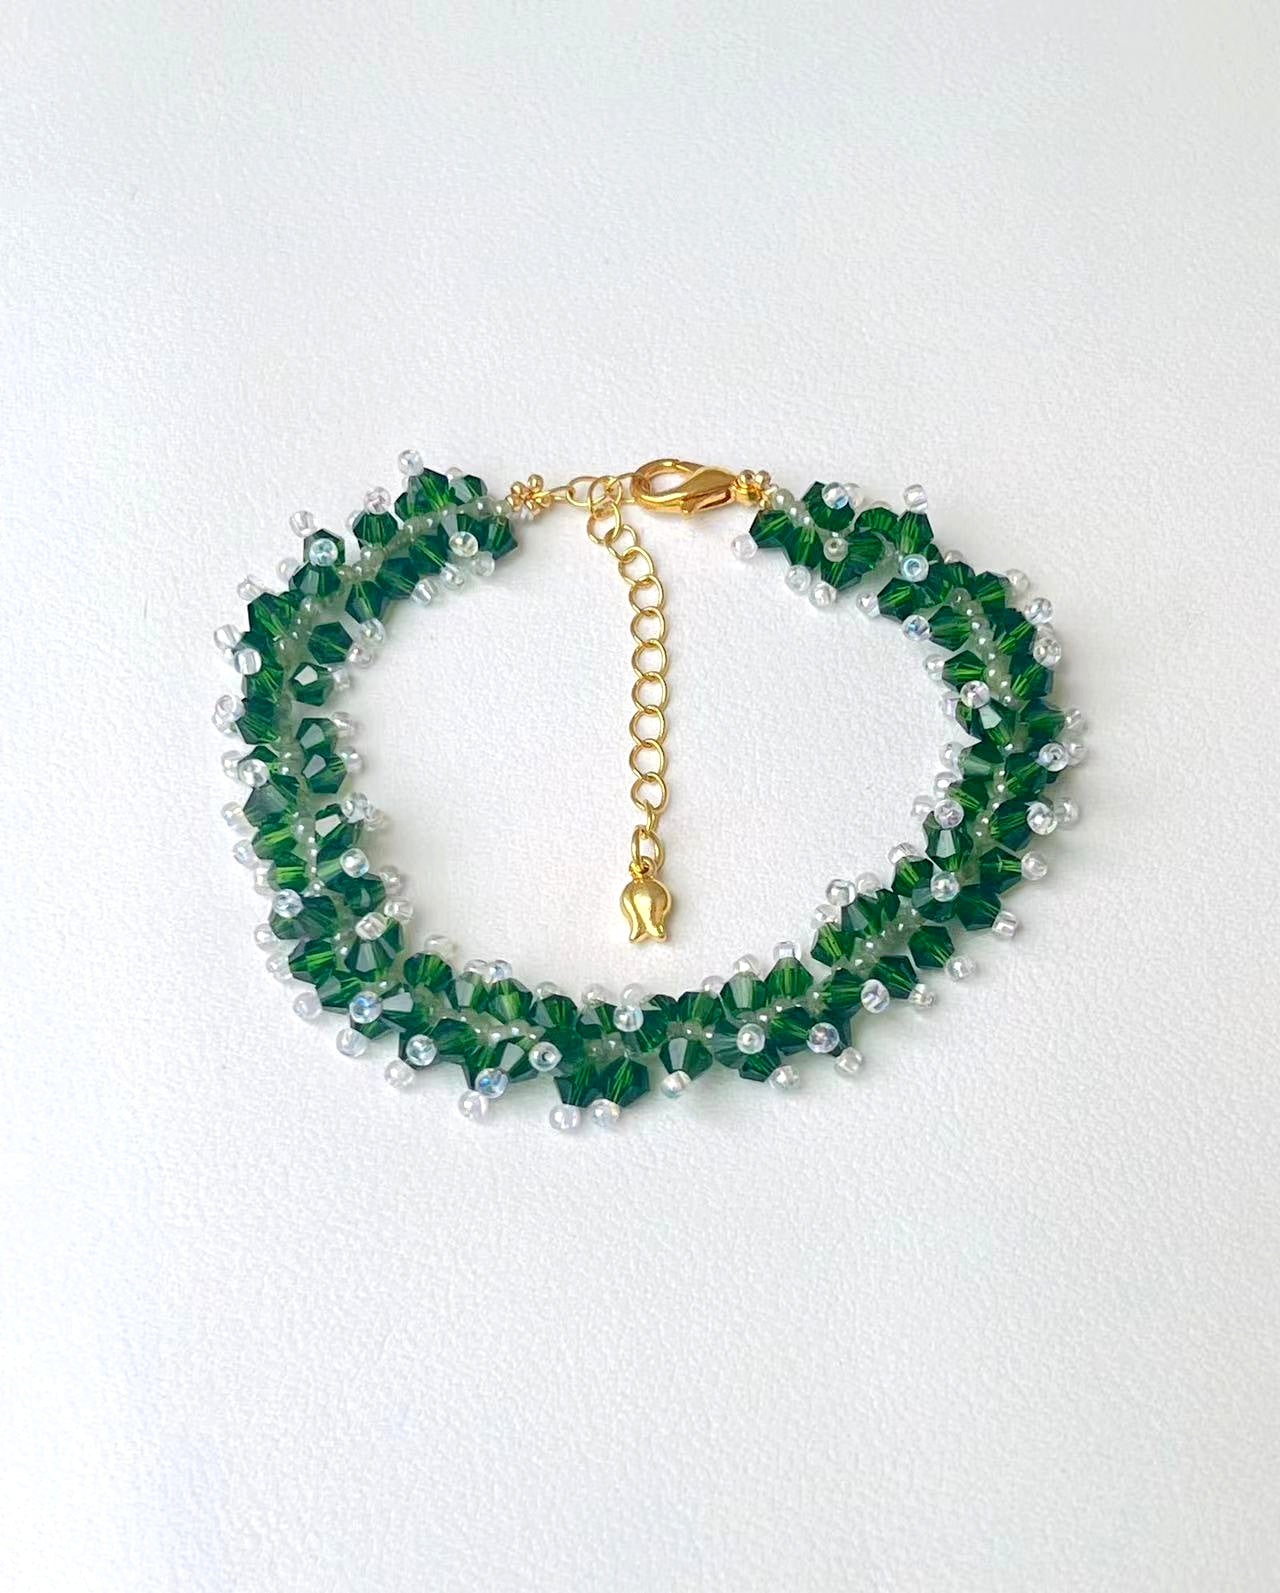 Stylish Crystal Bead Link Bracelet Handmade with Care